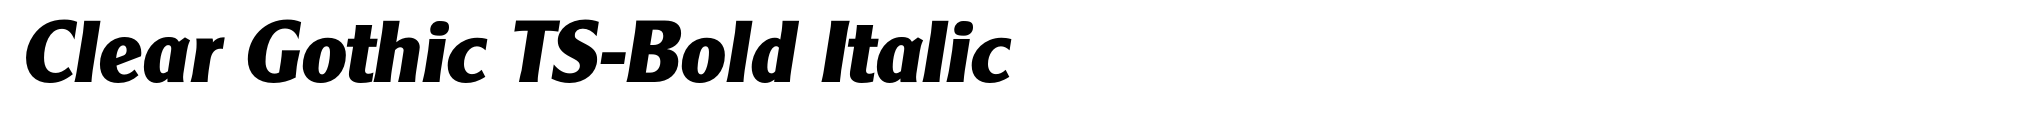 Clear Gothic TS-Bold Italic image